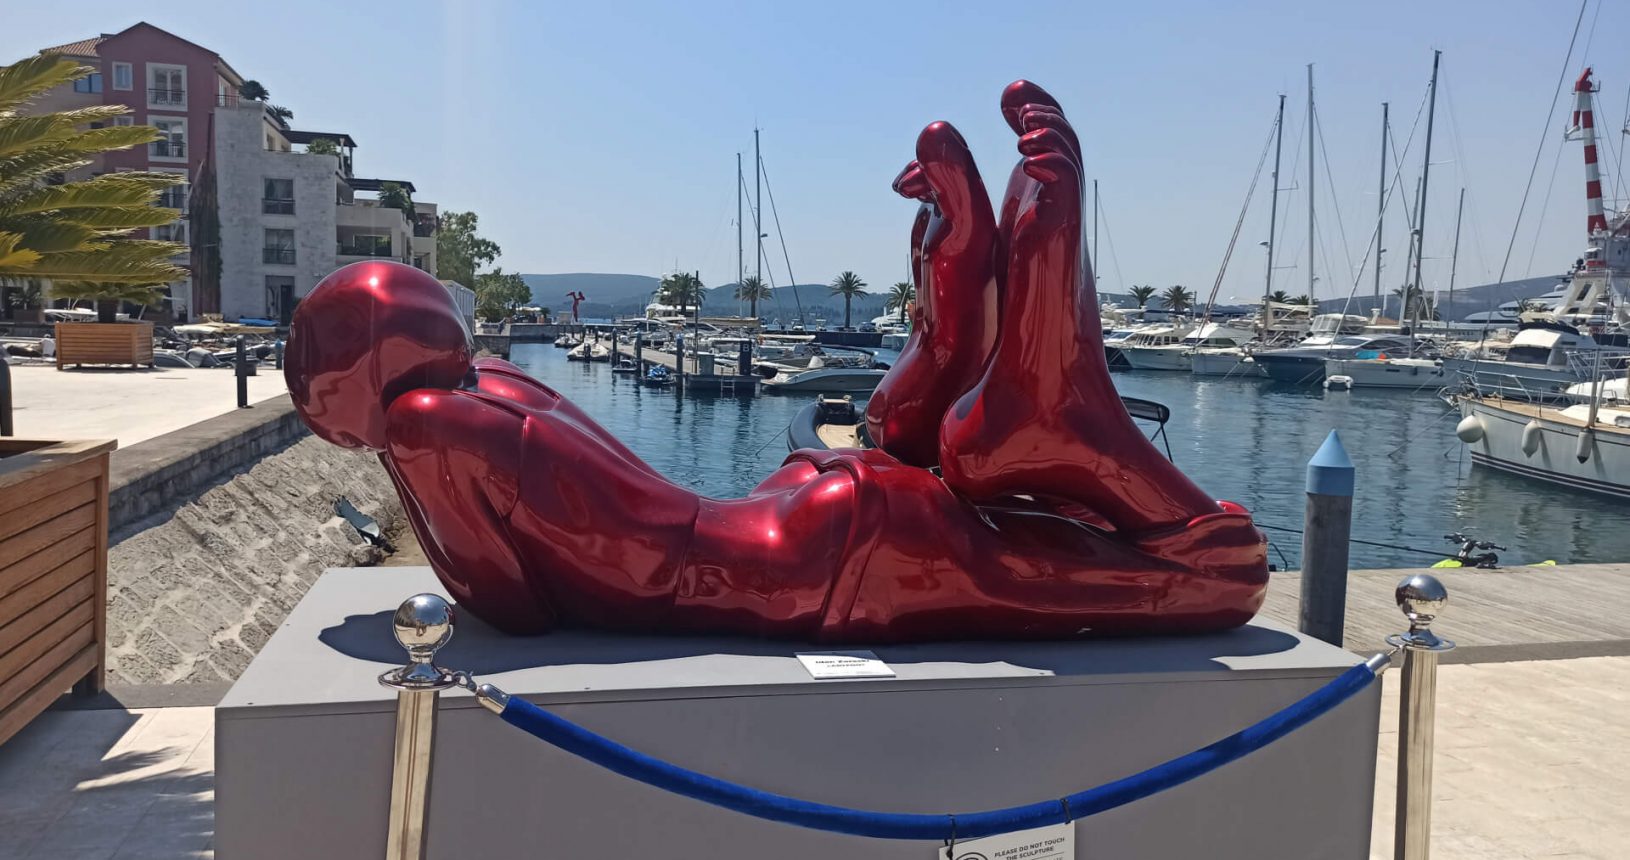 Summer sculpture 6 from behind in Porto Montenegro